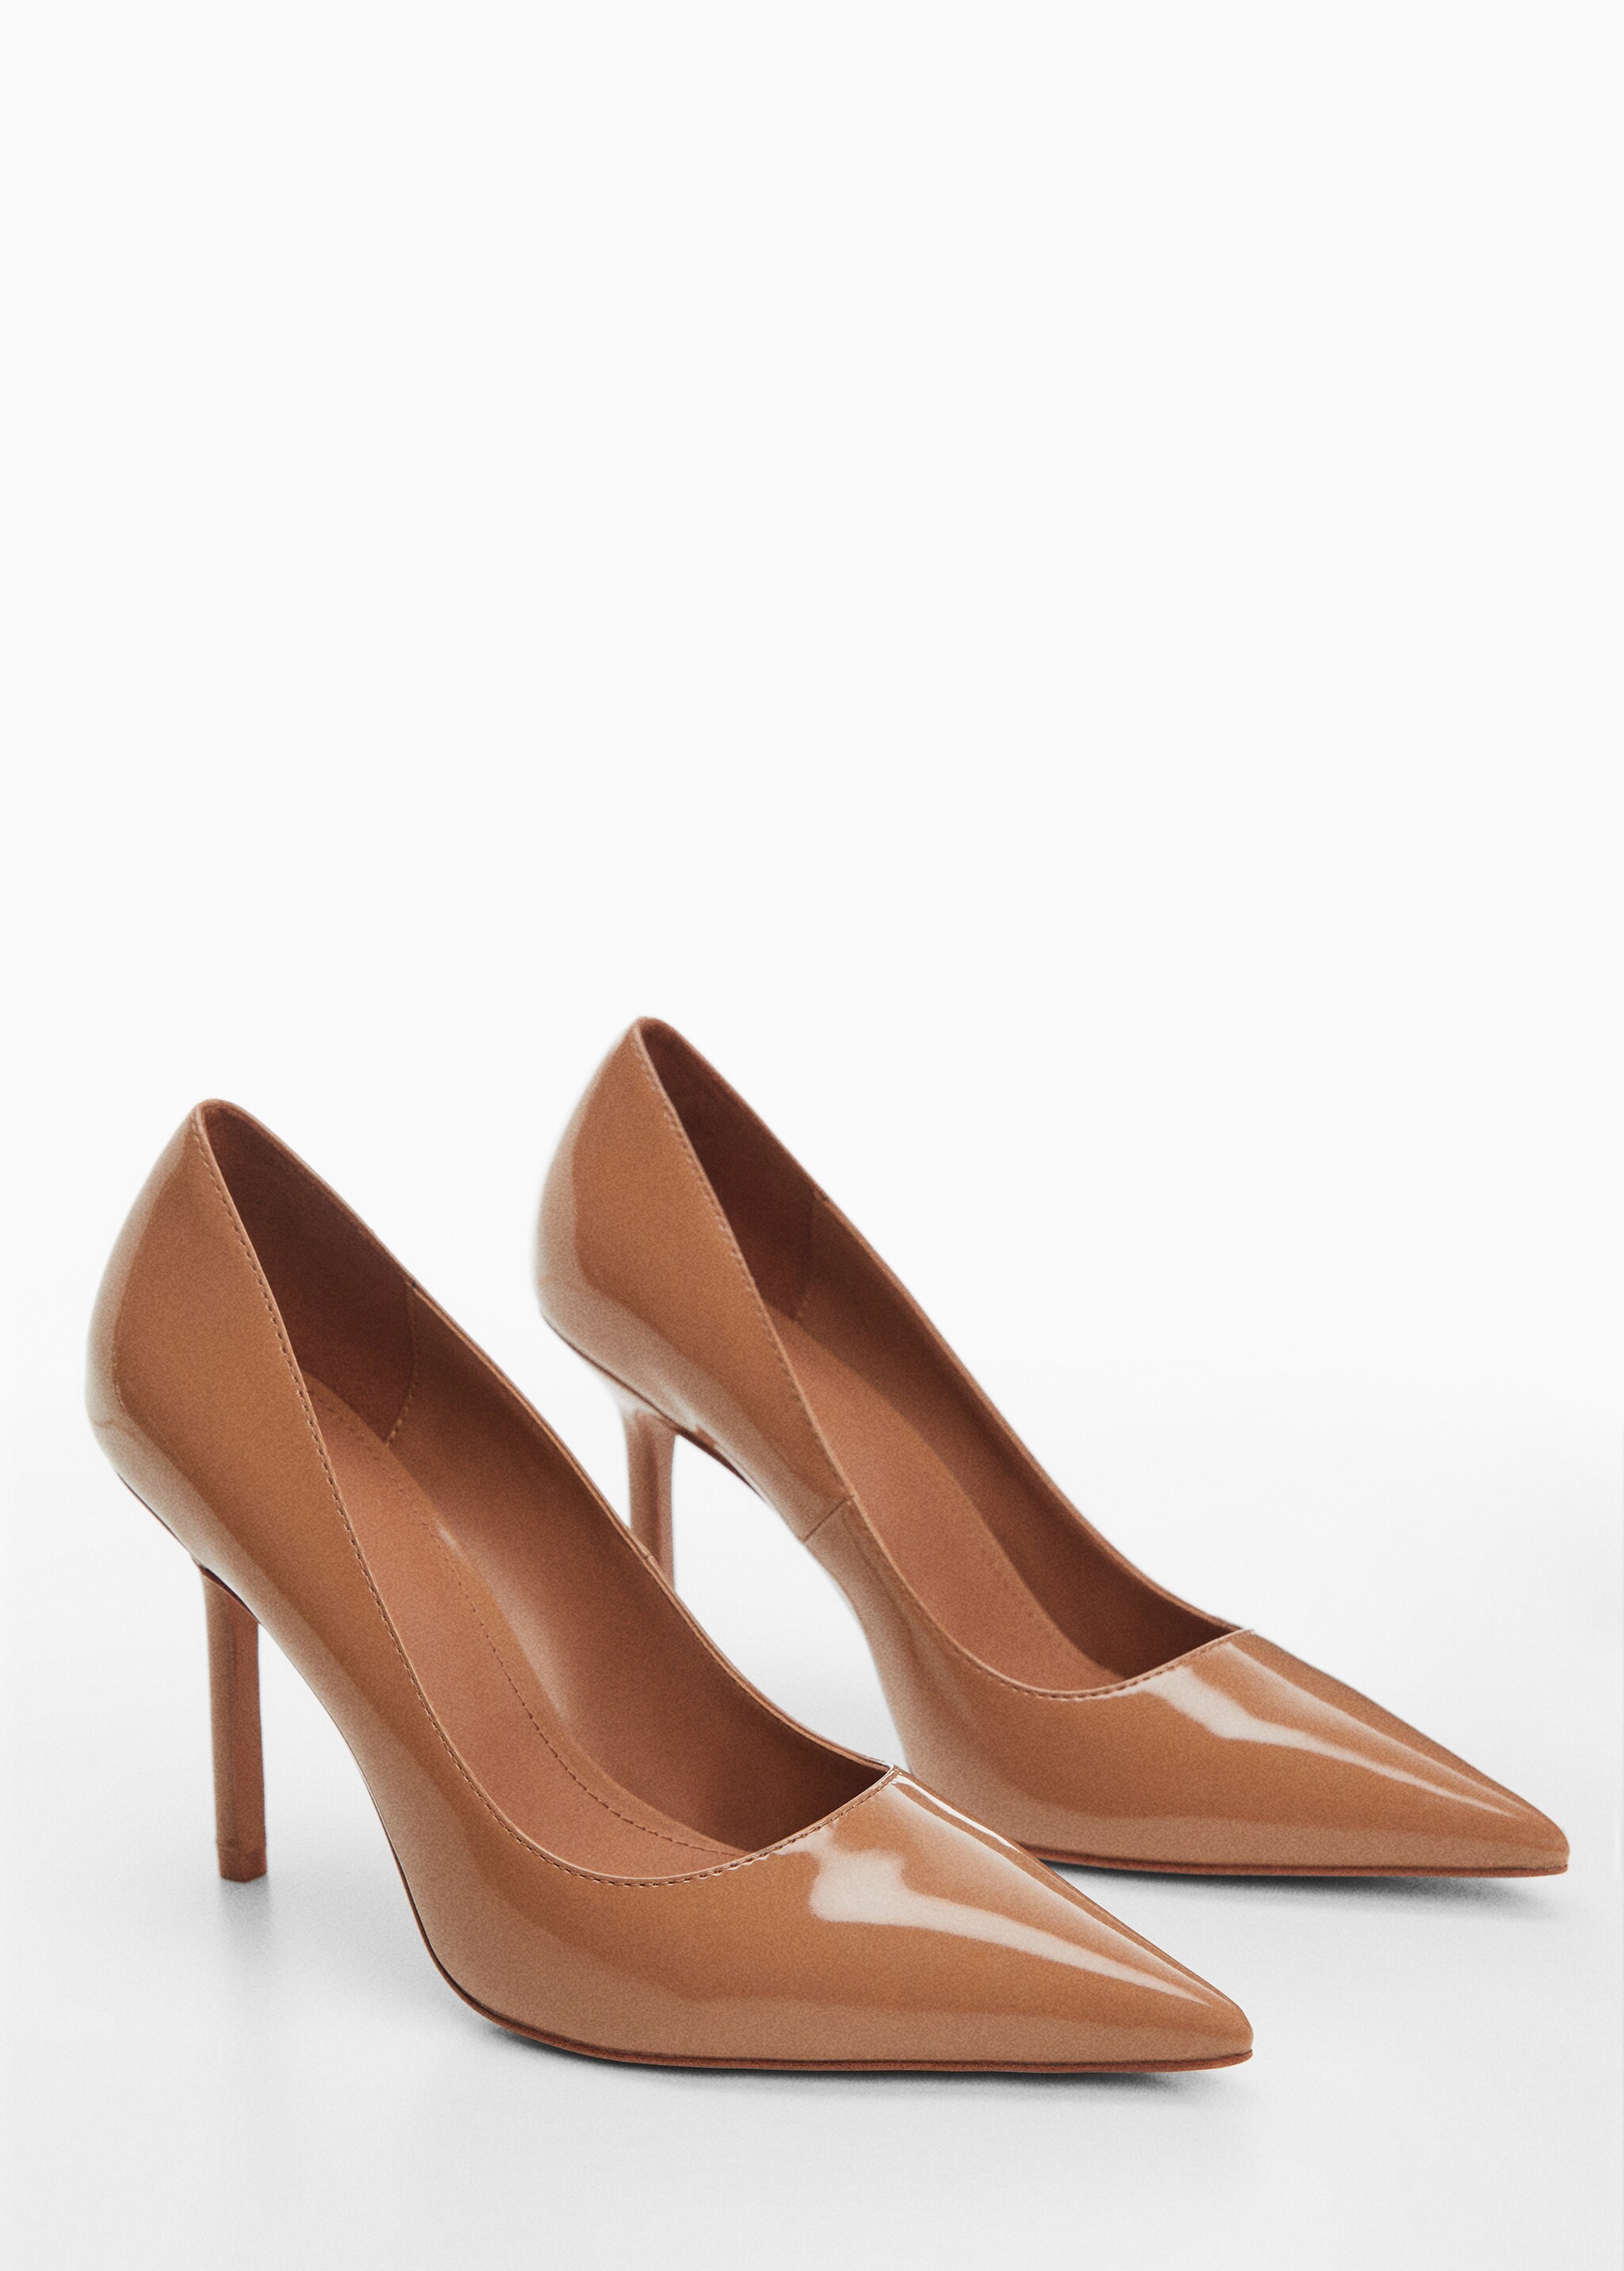 Patent leather-effect heeled shoes - Medium plane